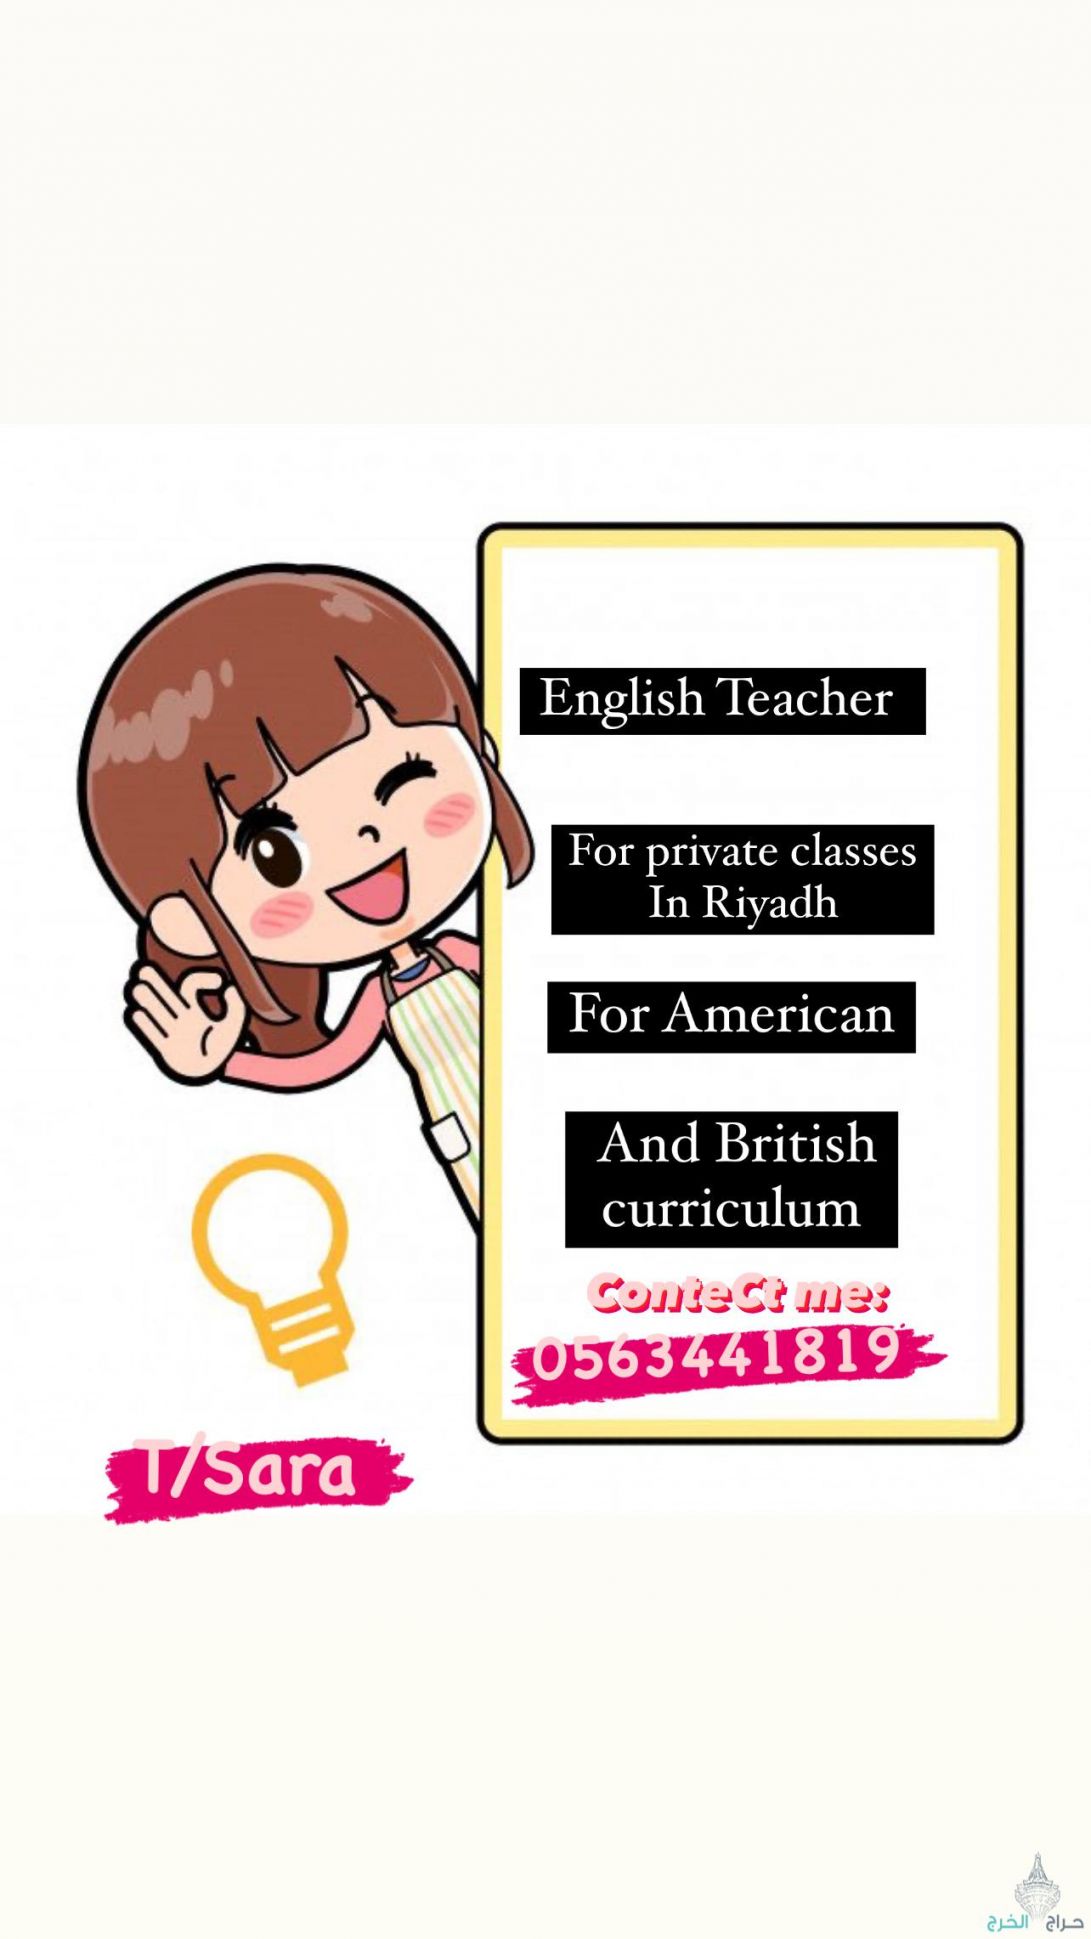 English tutor for all grades 0563441819